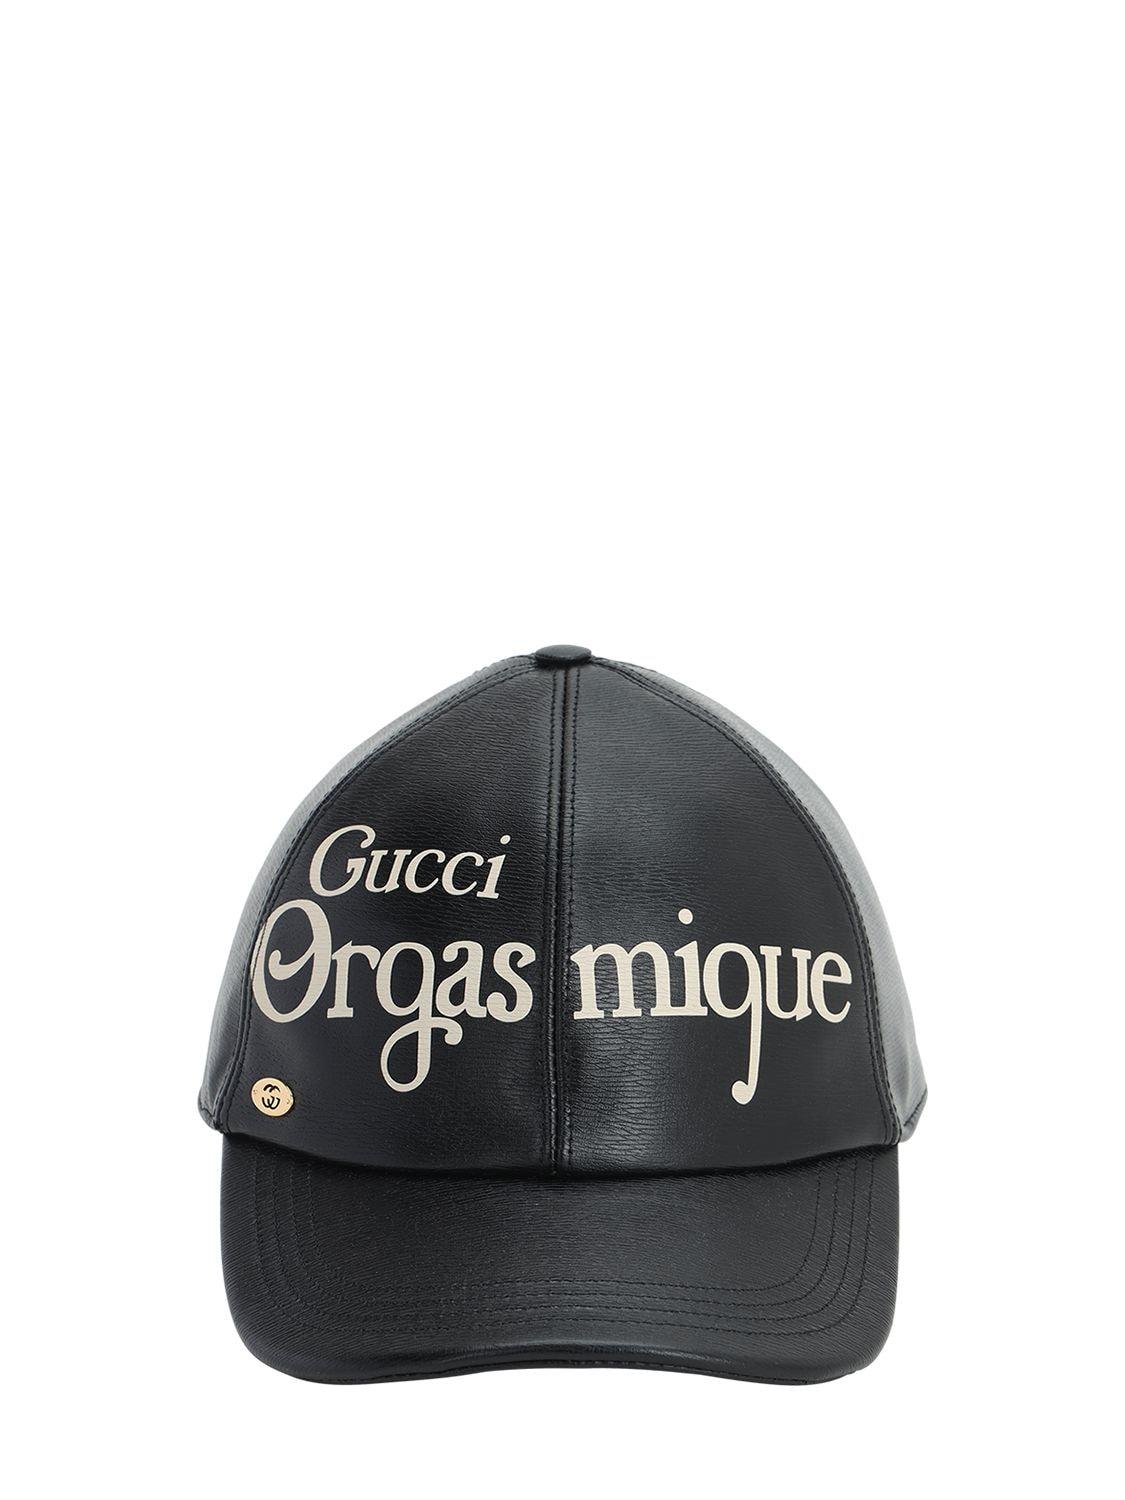 Look here - Original Gucci cap